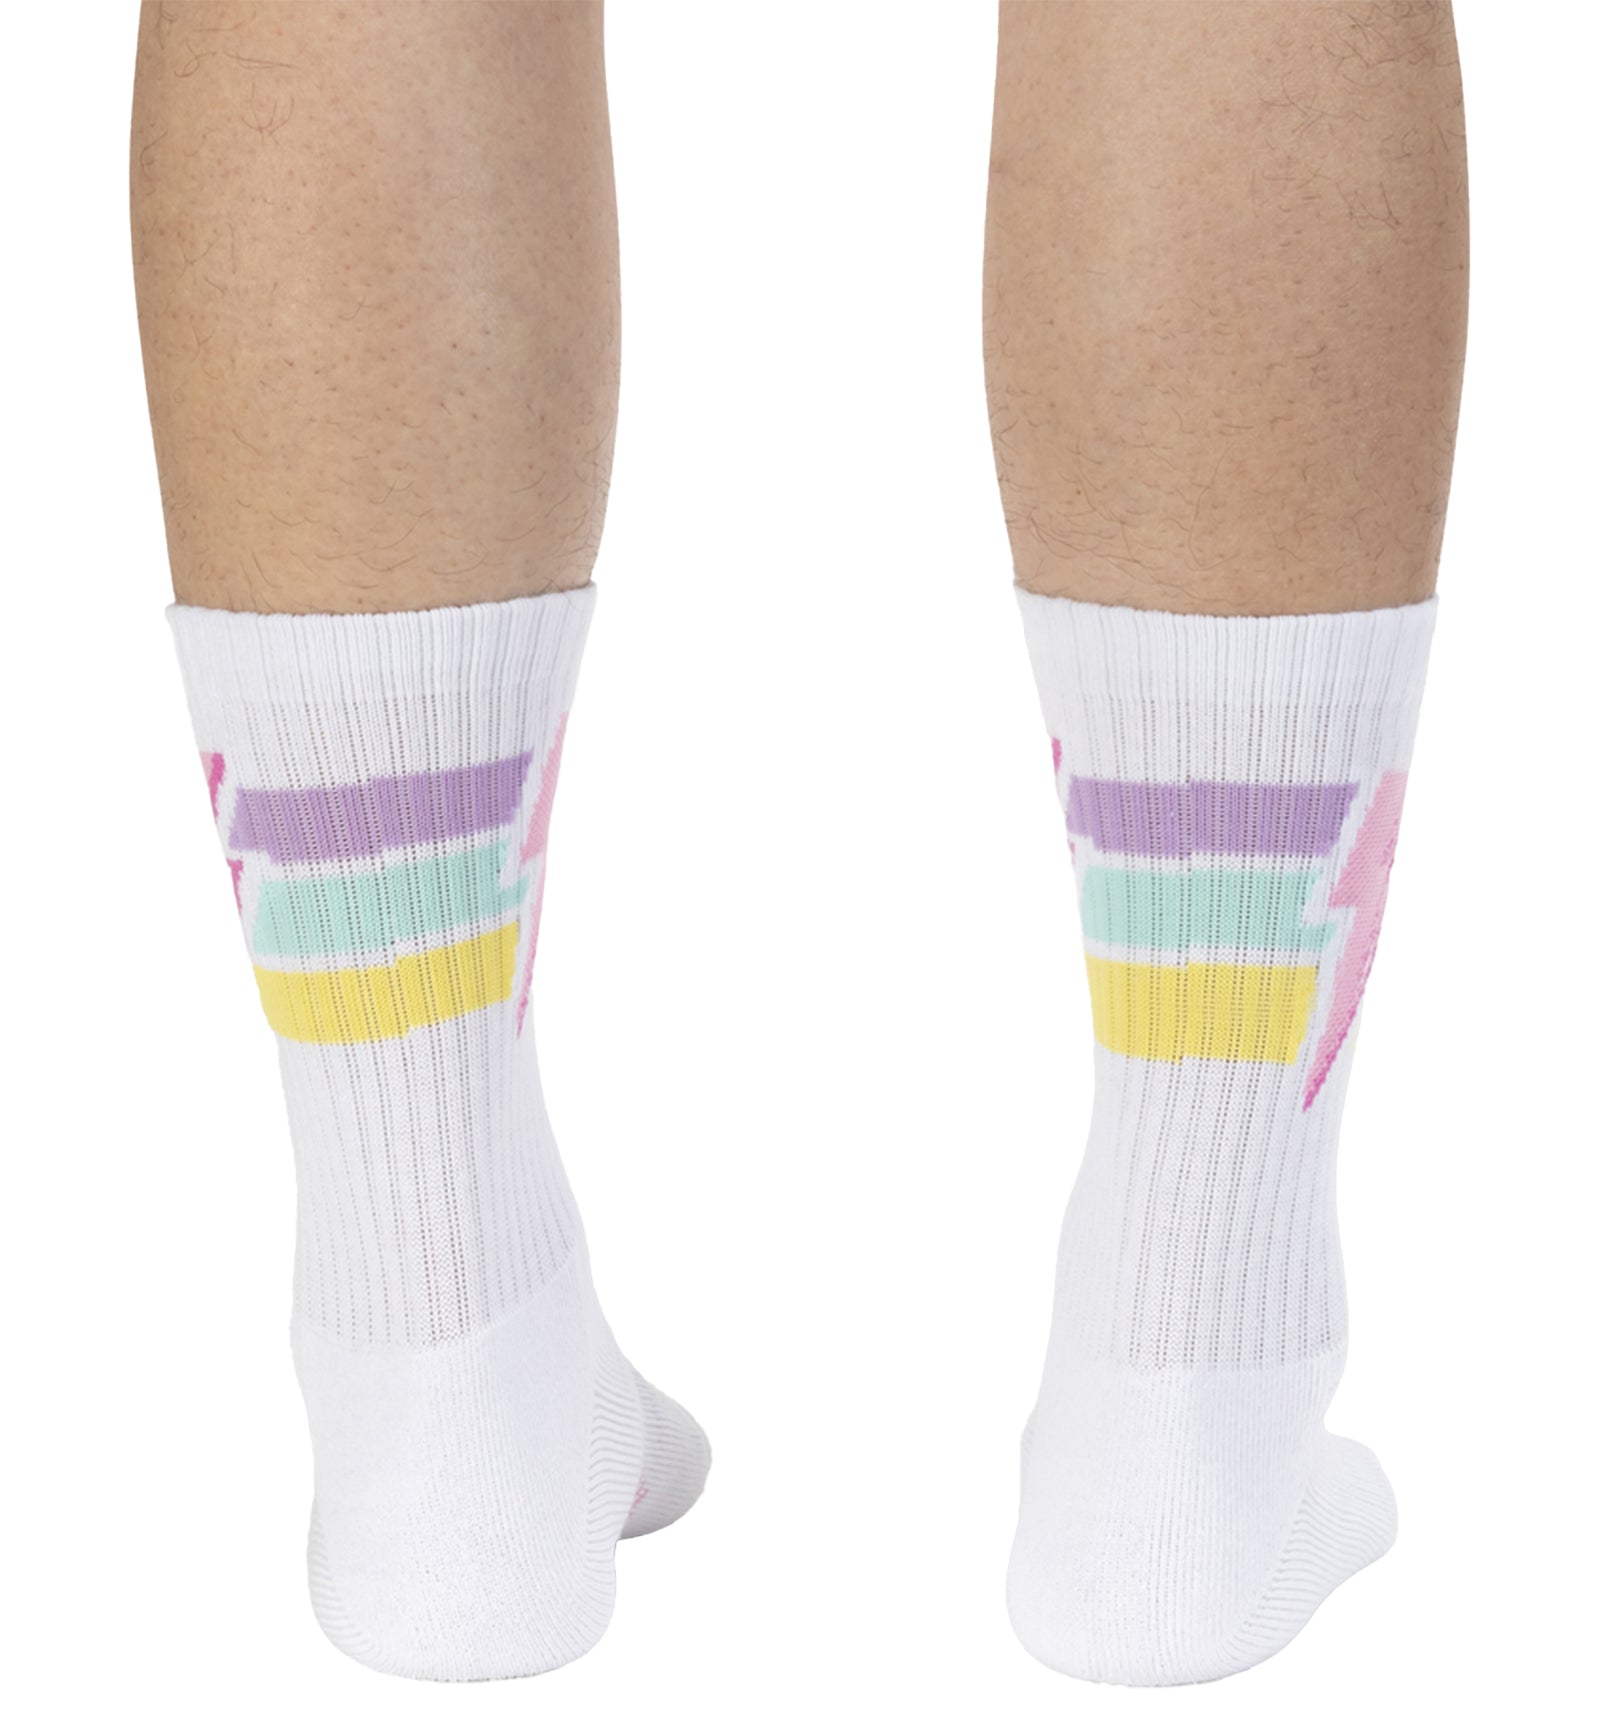 SOCK it to me Athletic Ribbed Crew Socks (R0010-2),Thunderstruck (White) - Thunderstruck (White),One Size